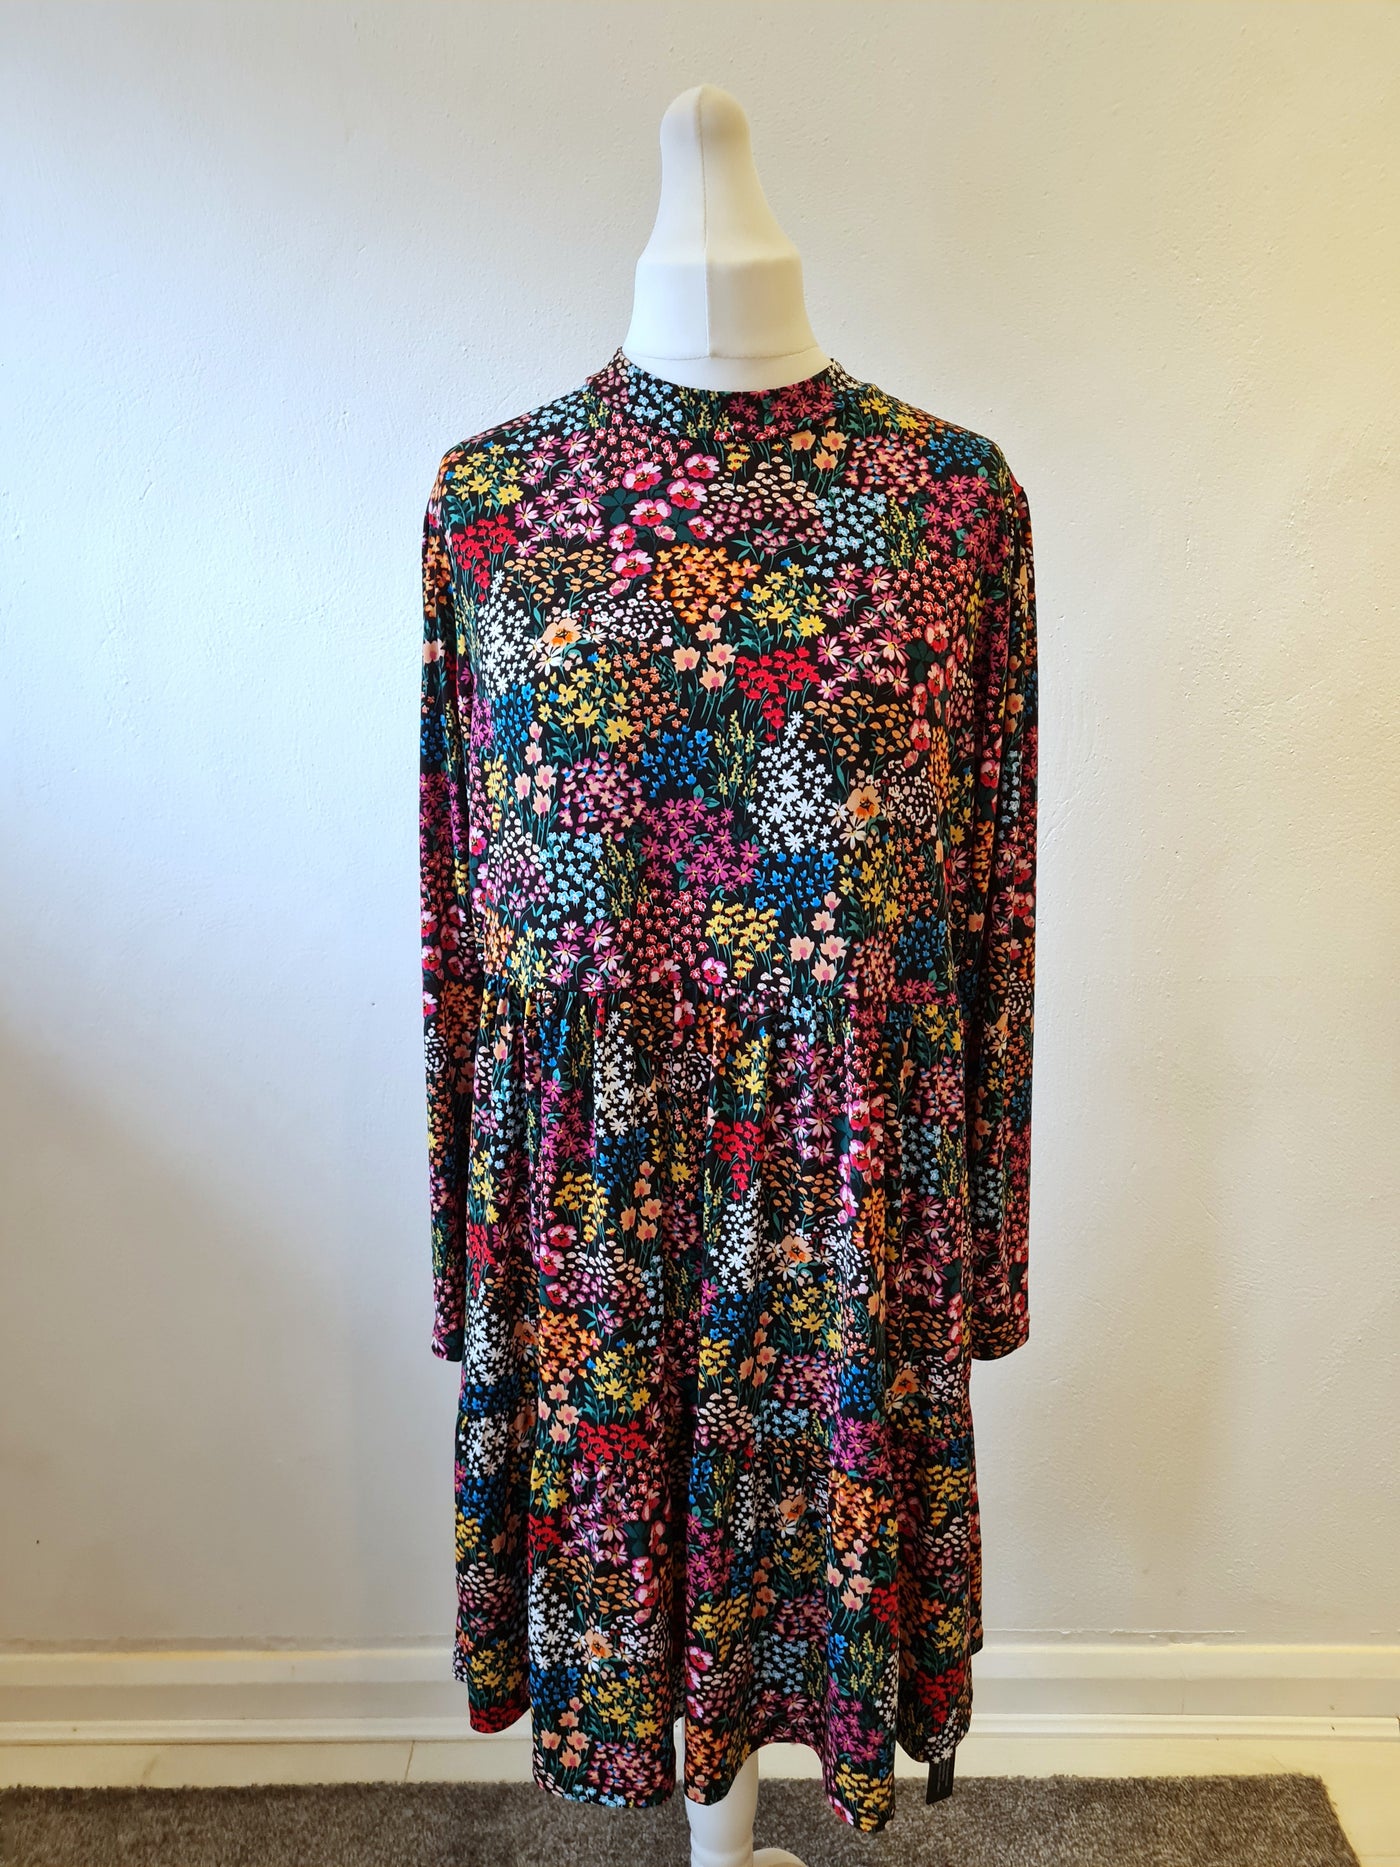 Roman Blk Floral Dress Size 16/18 New (RRP £40)